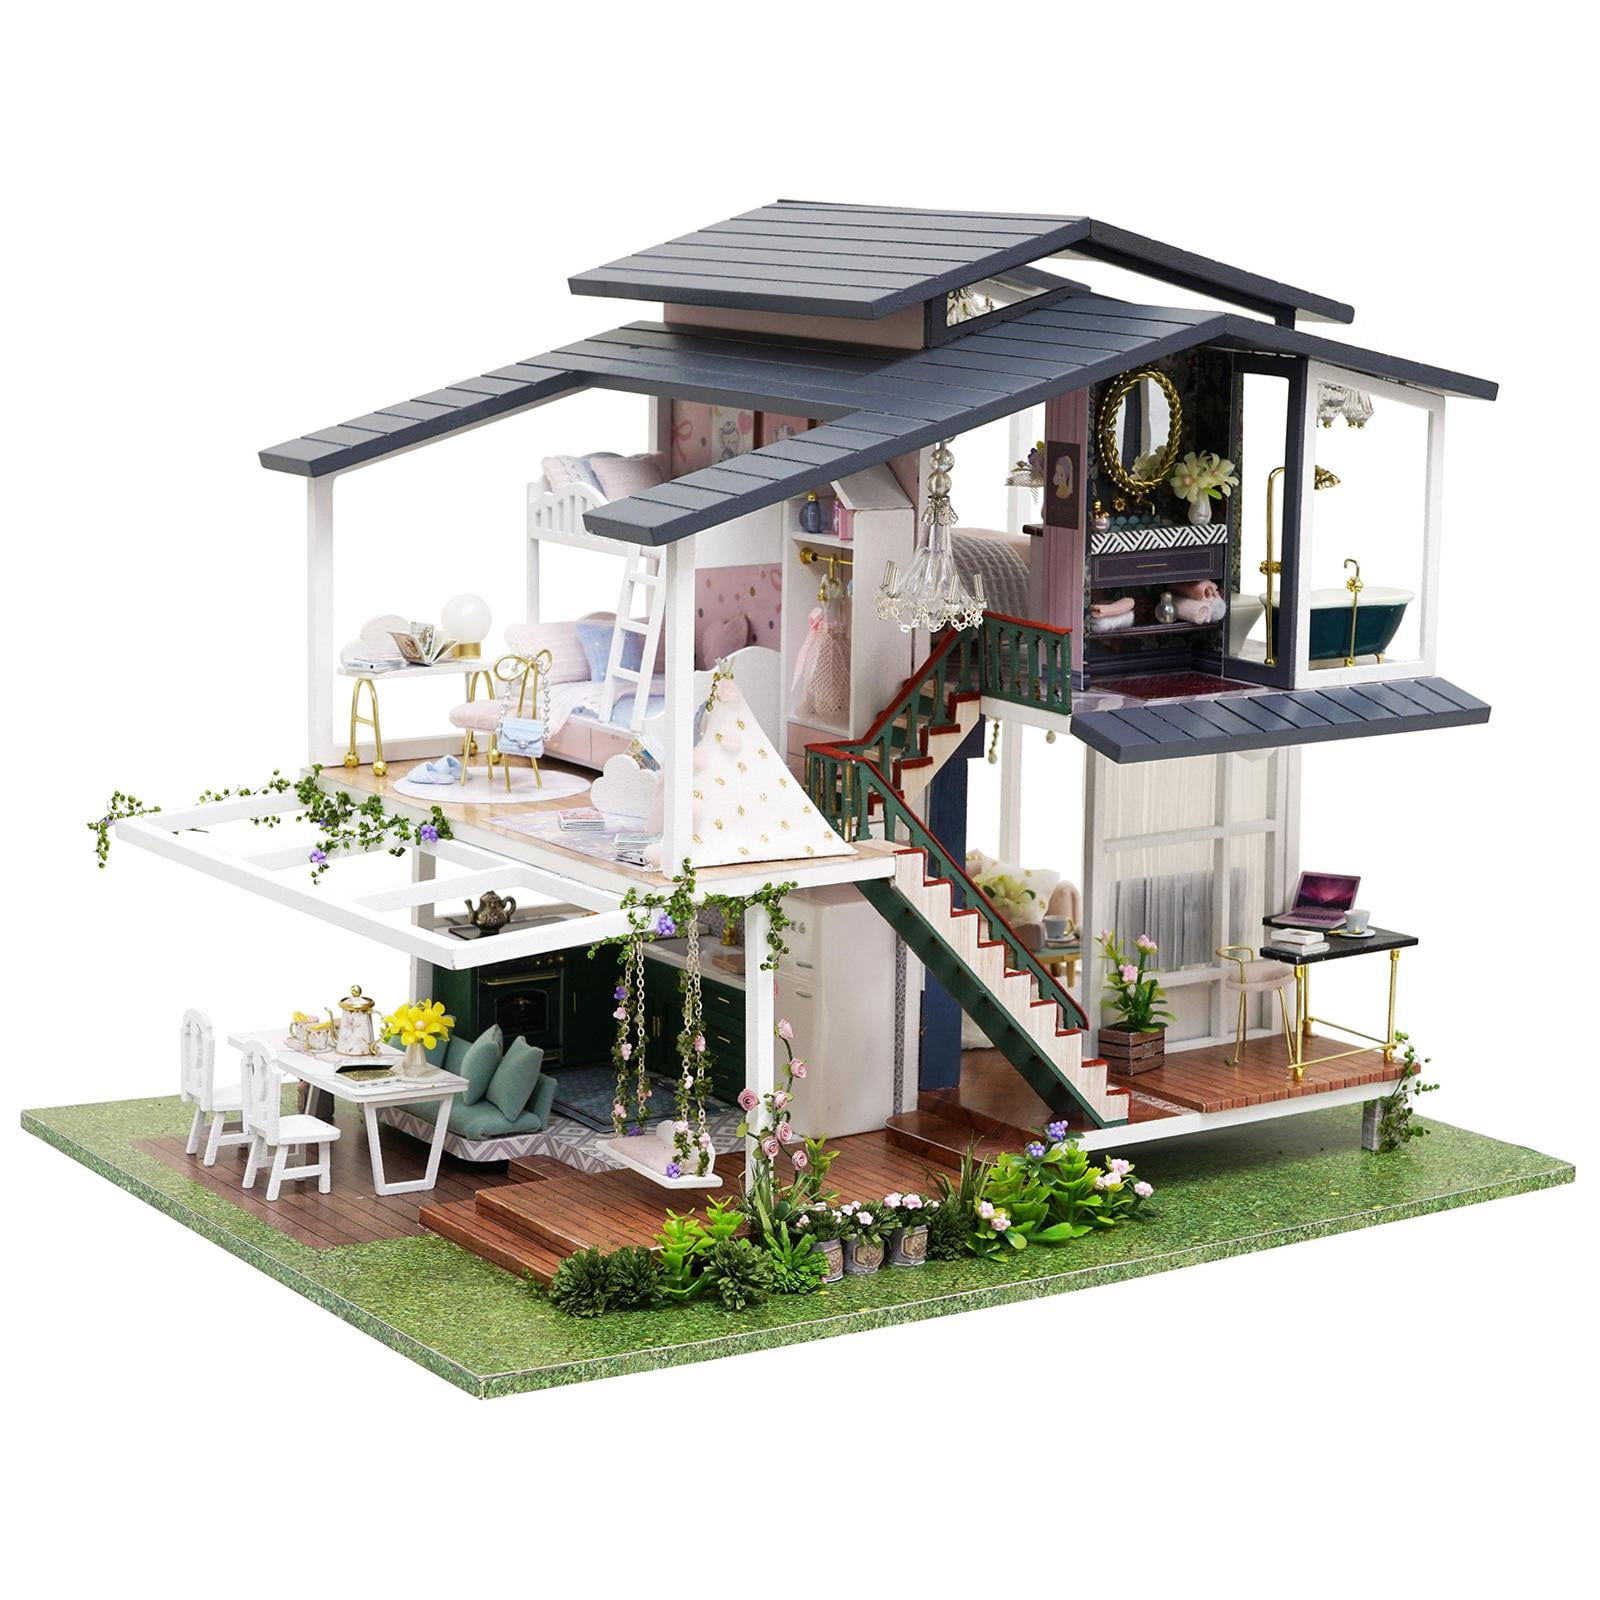 Dollhouse Miniature School Glue - Handcrafted